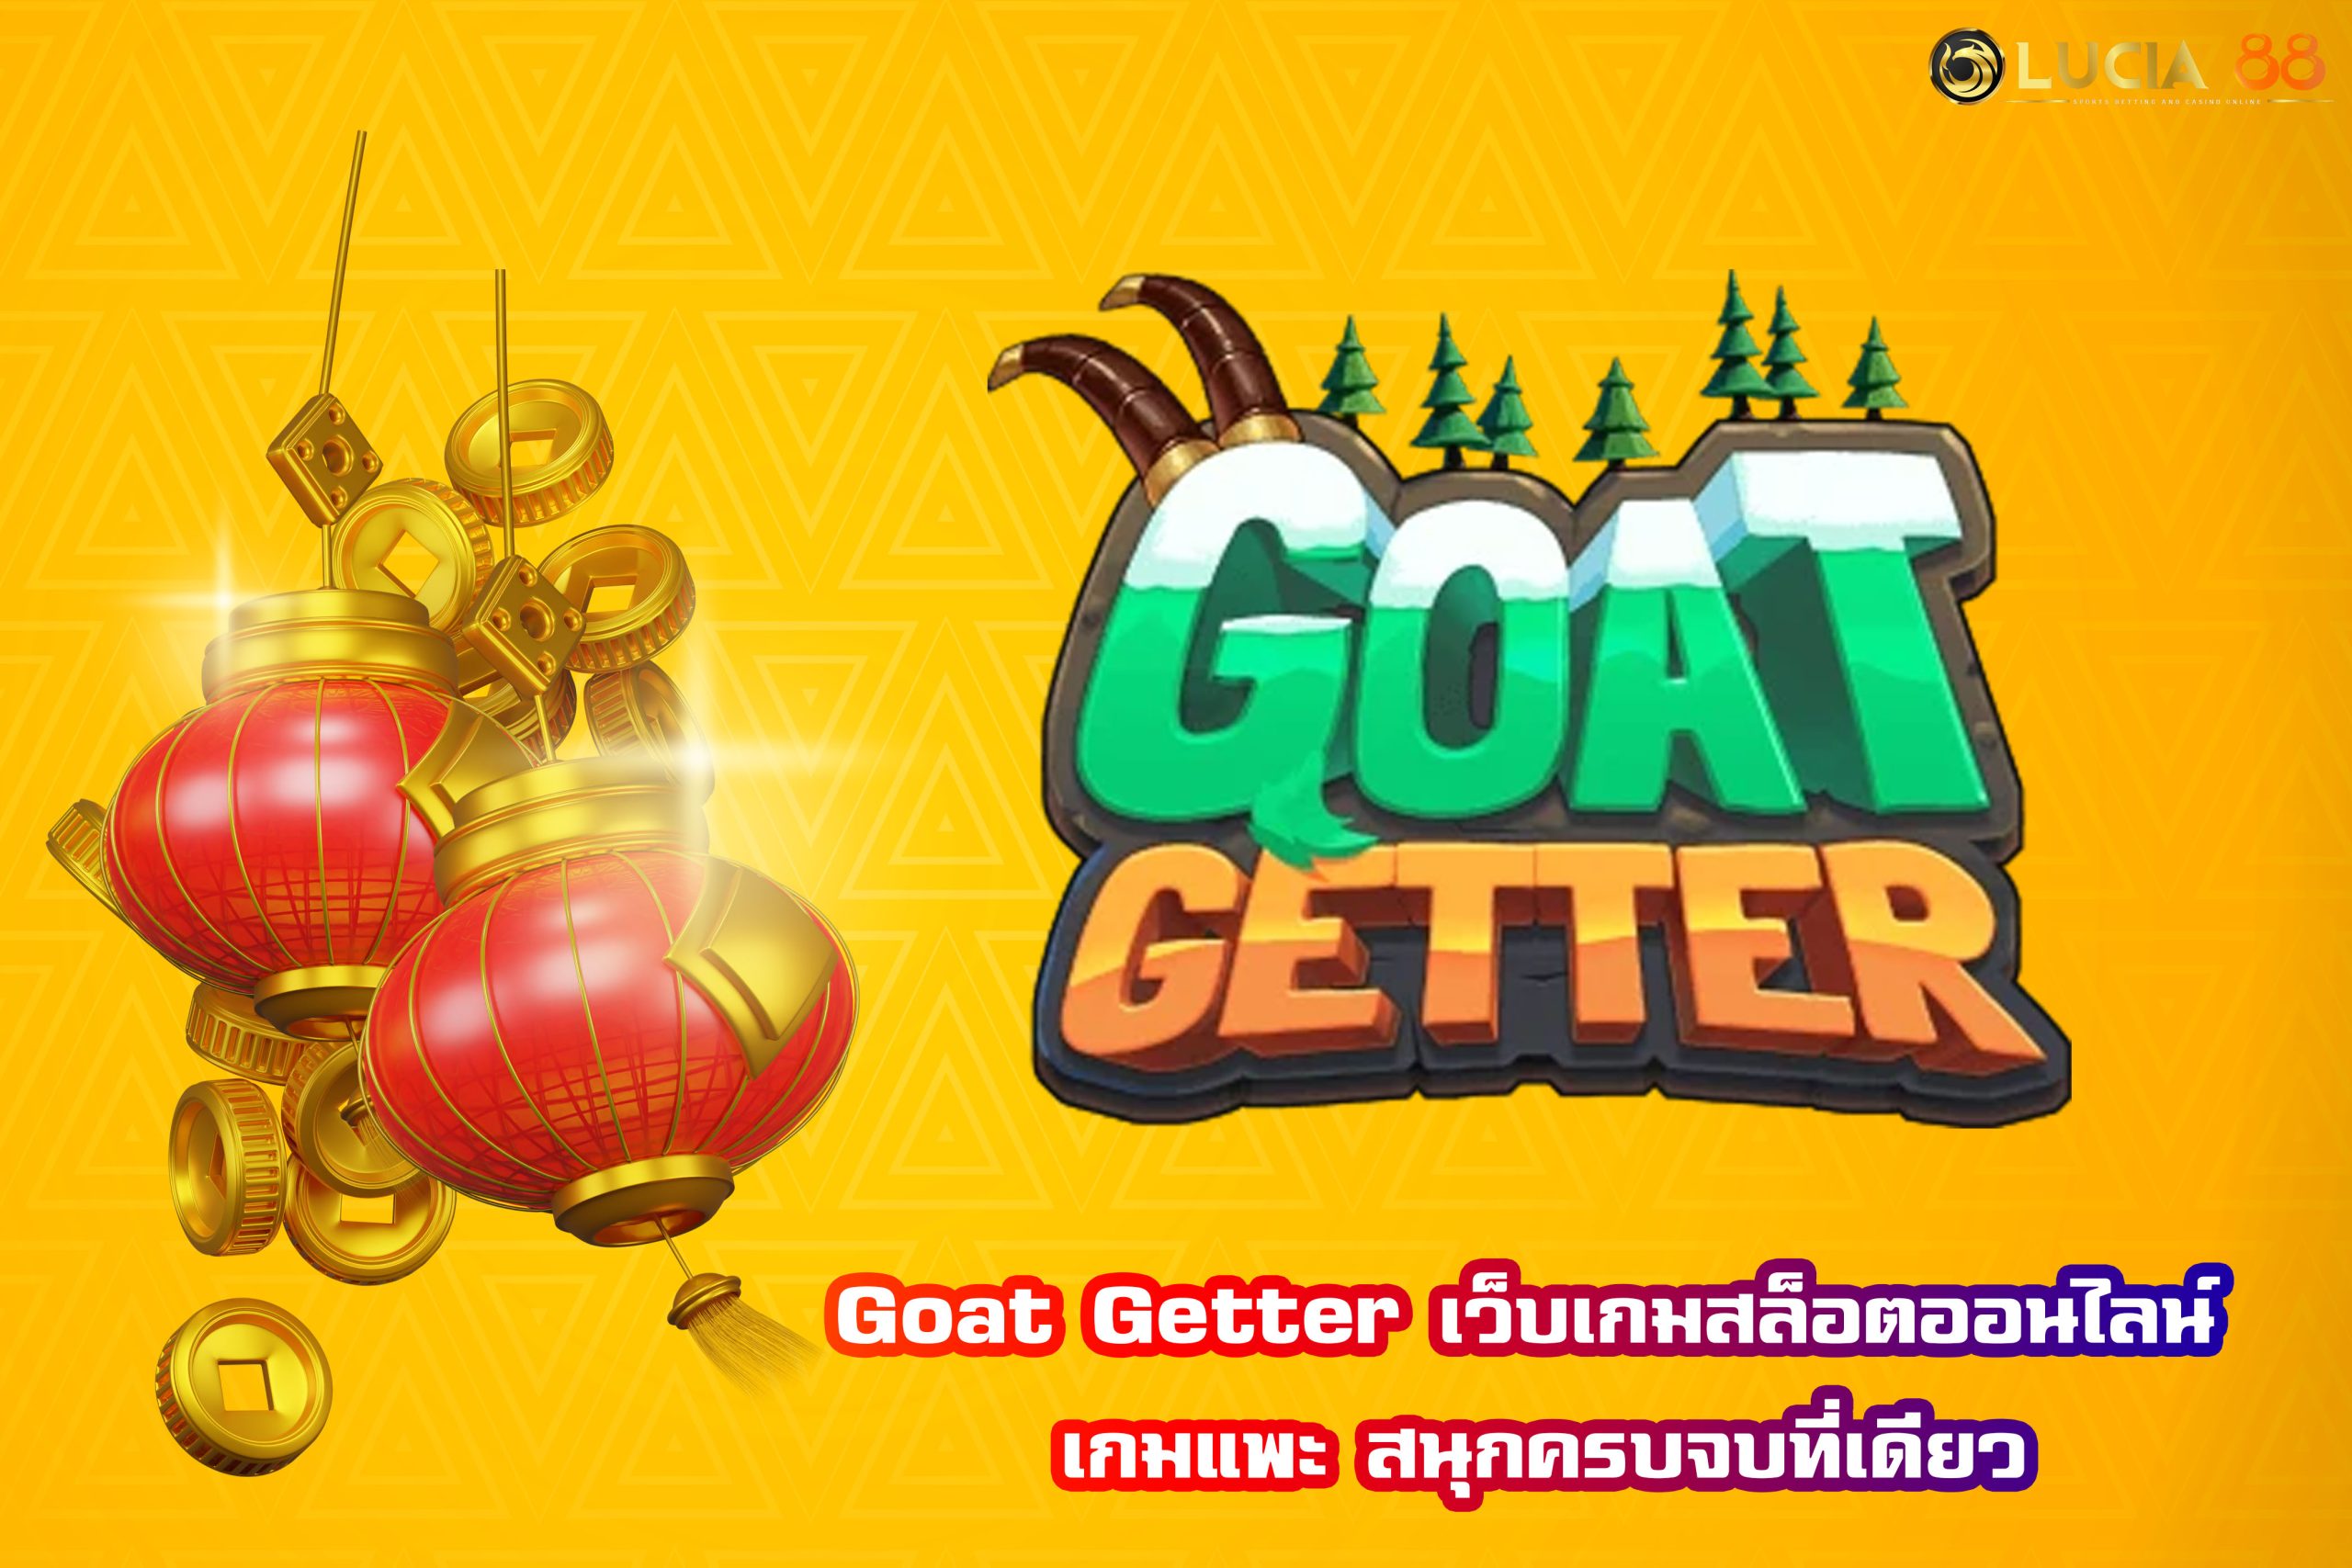 Goat Getter เว็บเกมสล็อตออนไลน์ เกมแพะ สนุกครบจบที่เดียว